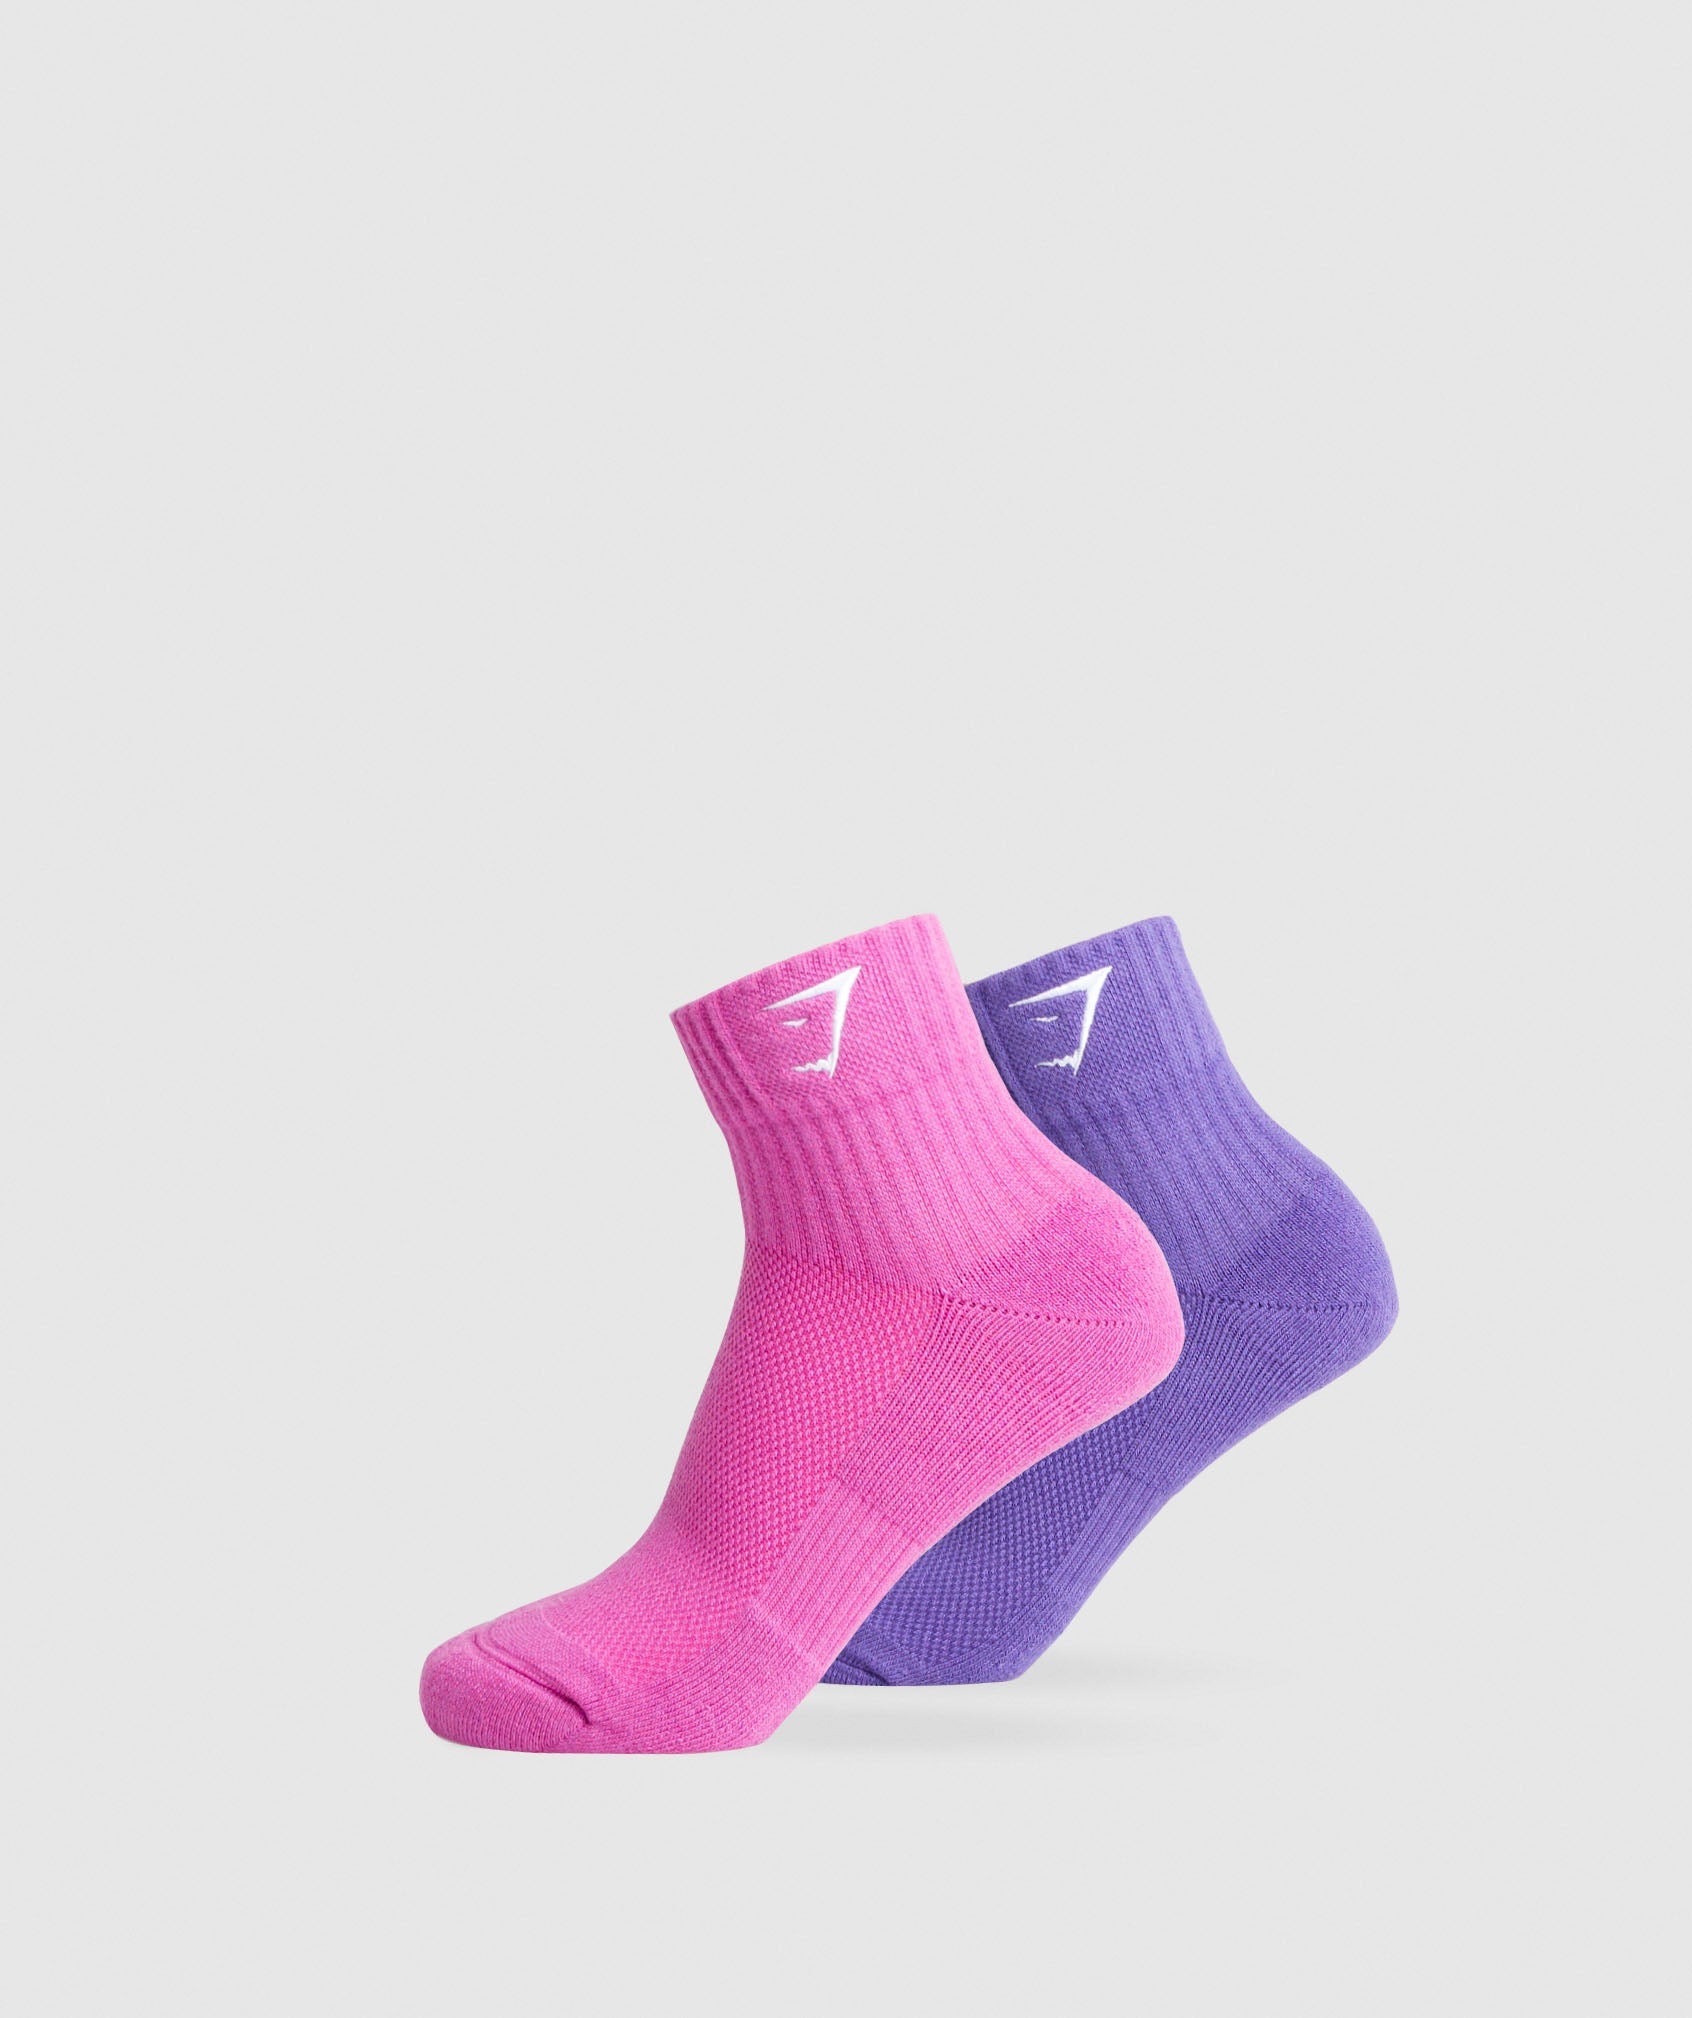 Sharkhead Embroidered Quarter Socks 2pk in Shelly Pink/Stellar Purple - view 1